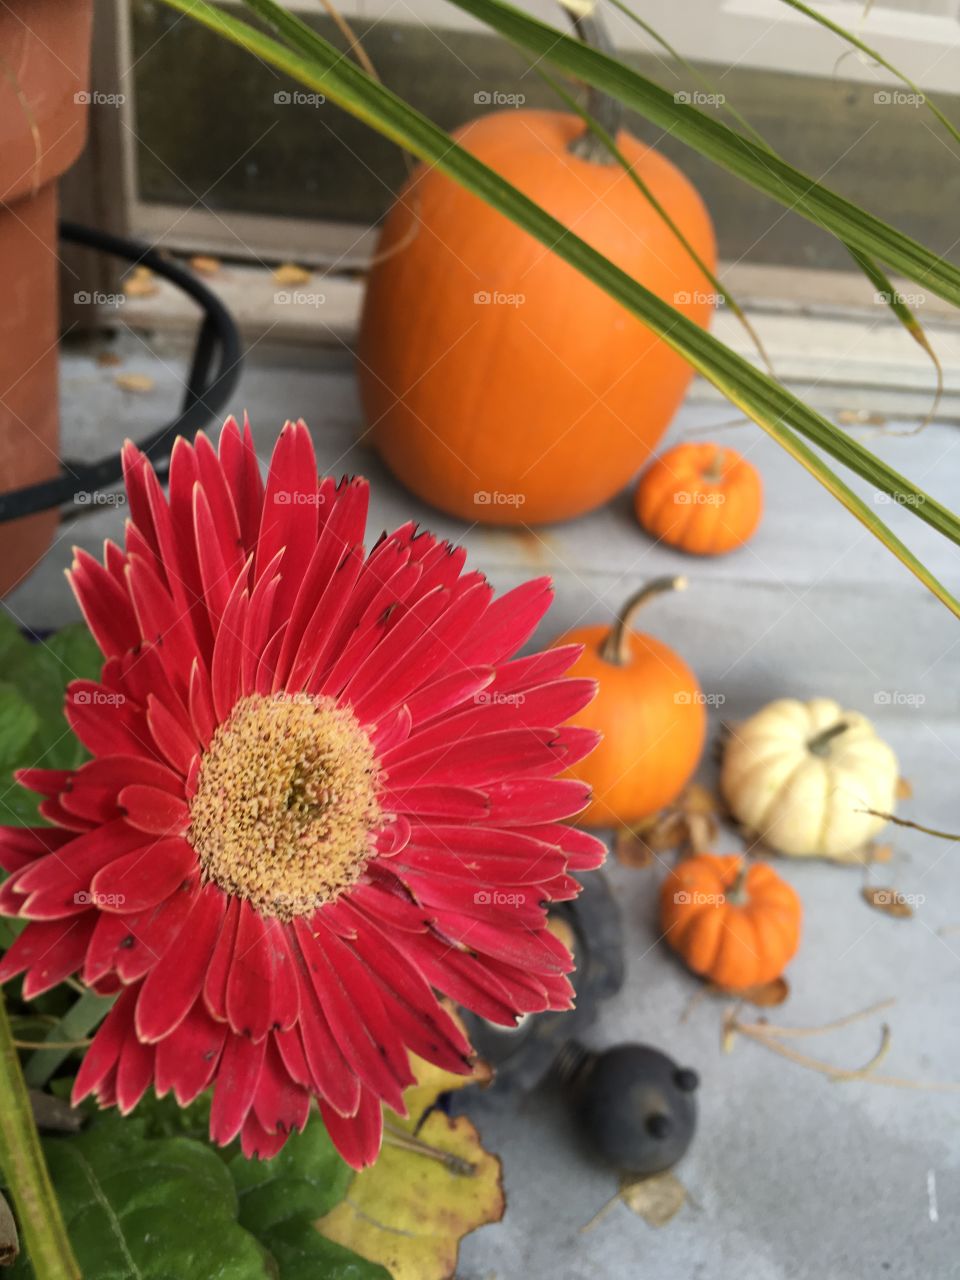 Fall flowers and Halloween pumpkins